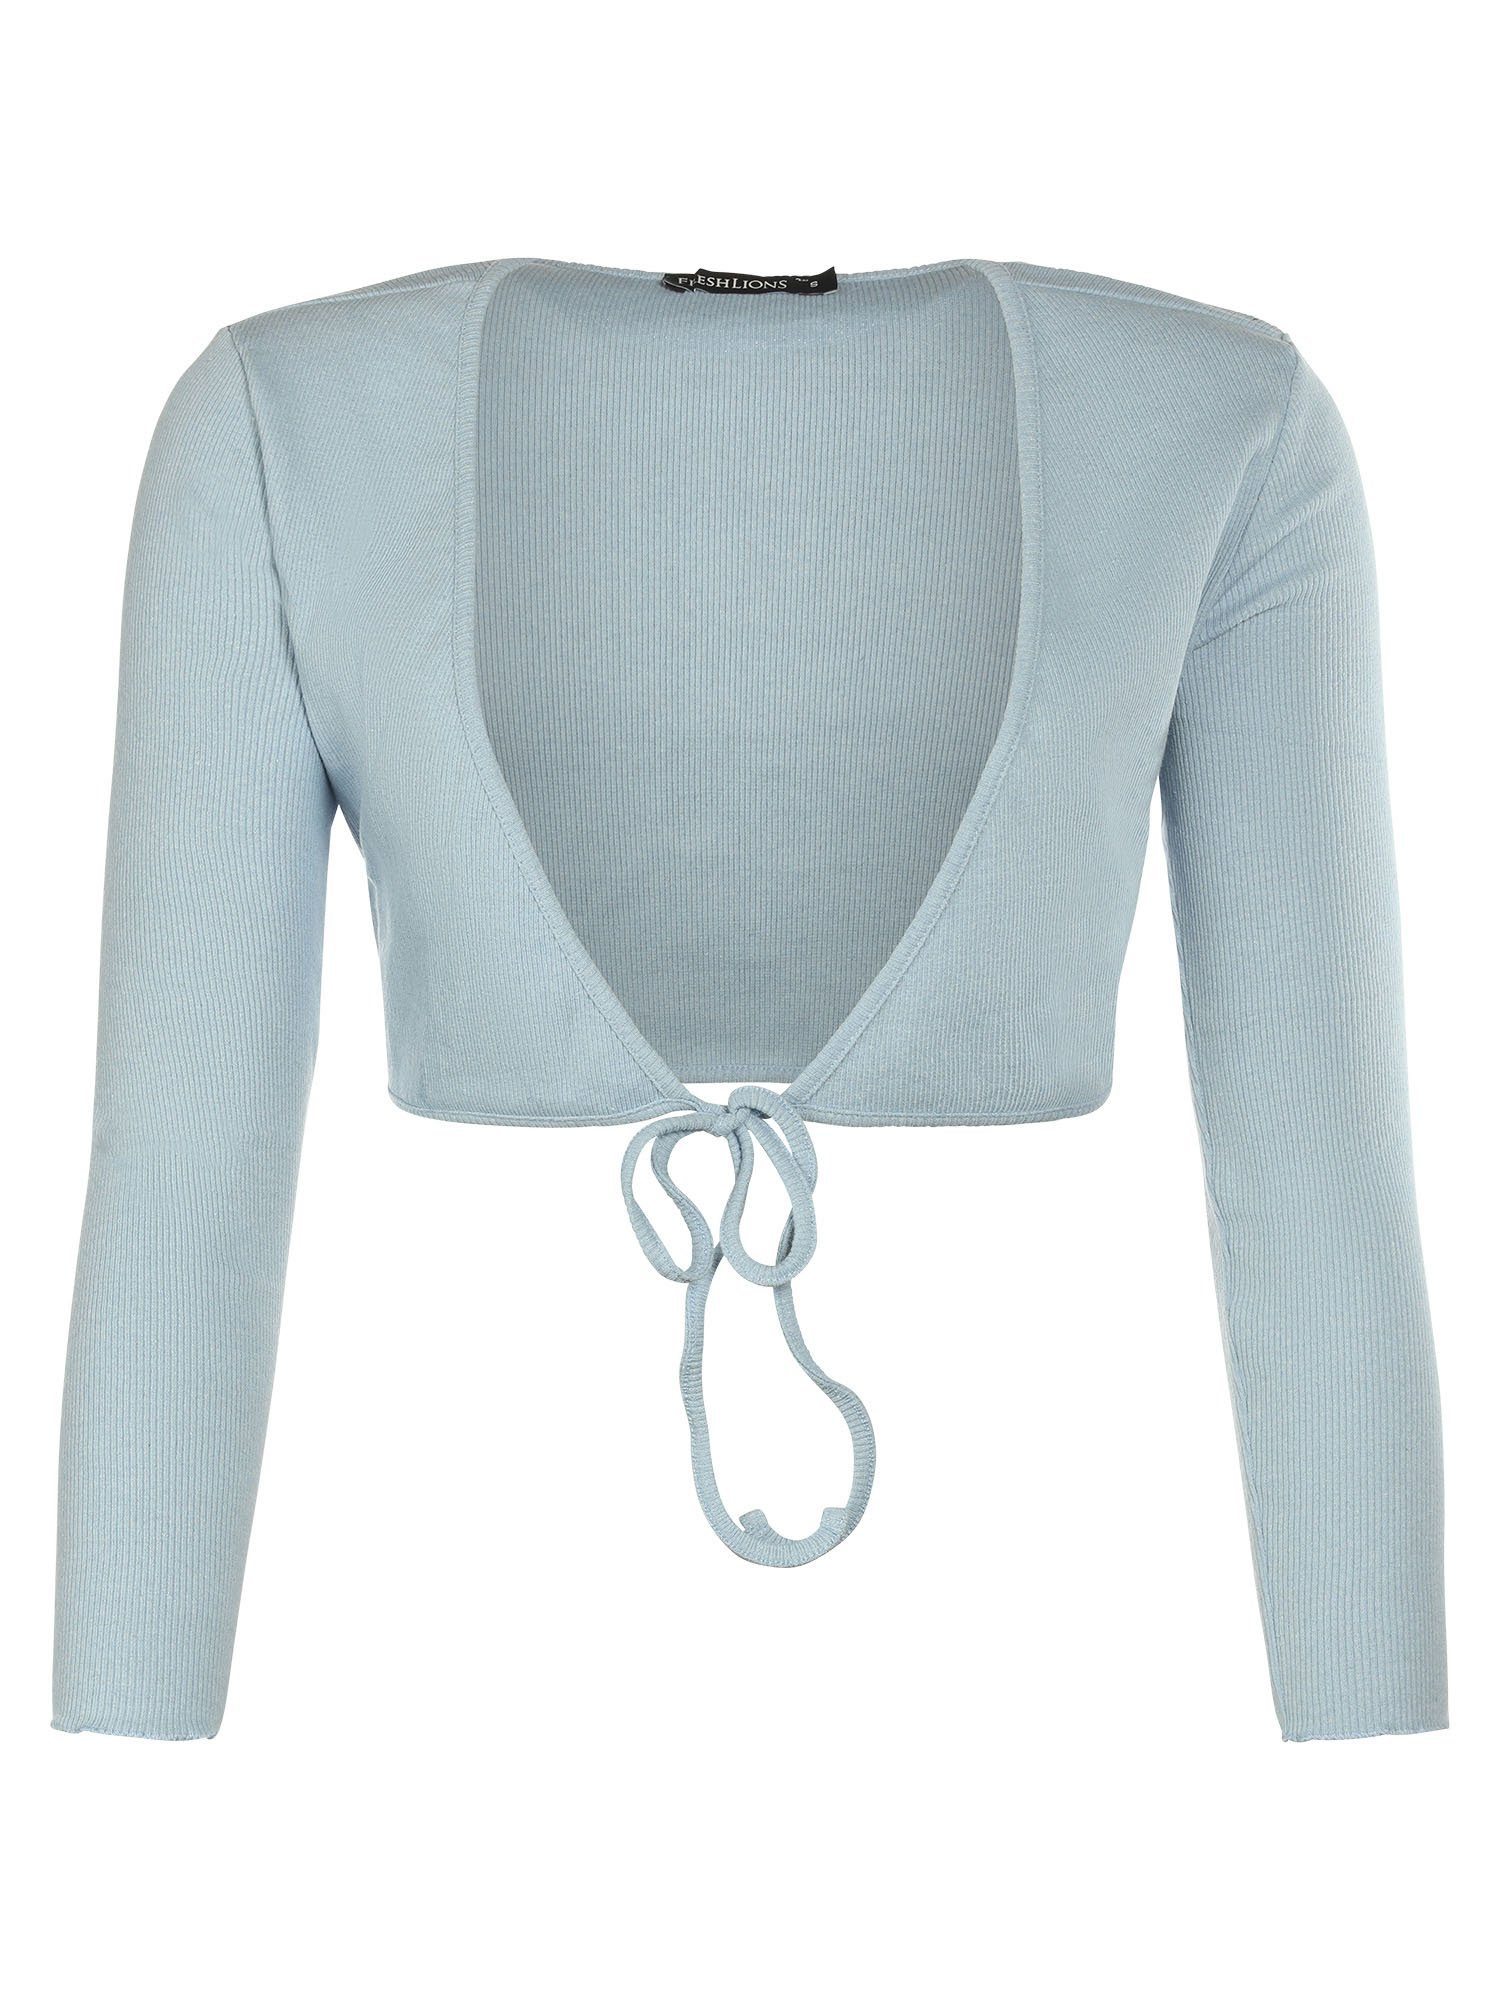 Freshlions Langarmbluse Top mit Bindegurt 'Gigi' Wickel-Design Blau